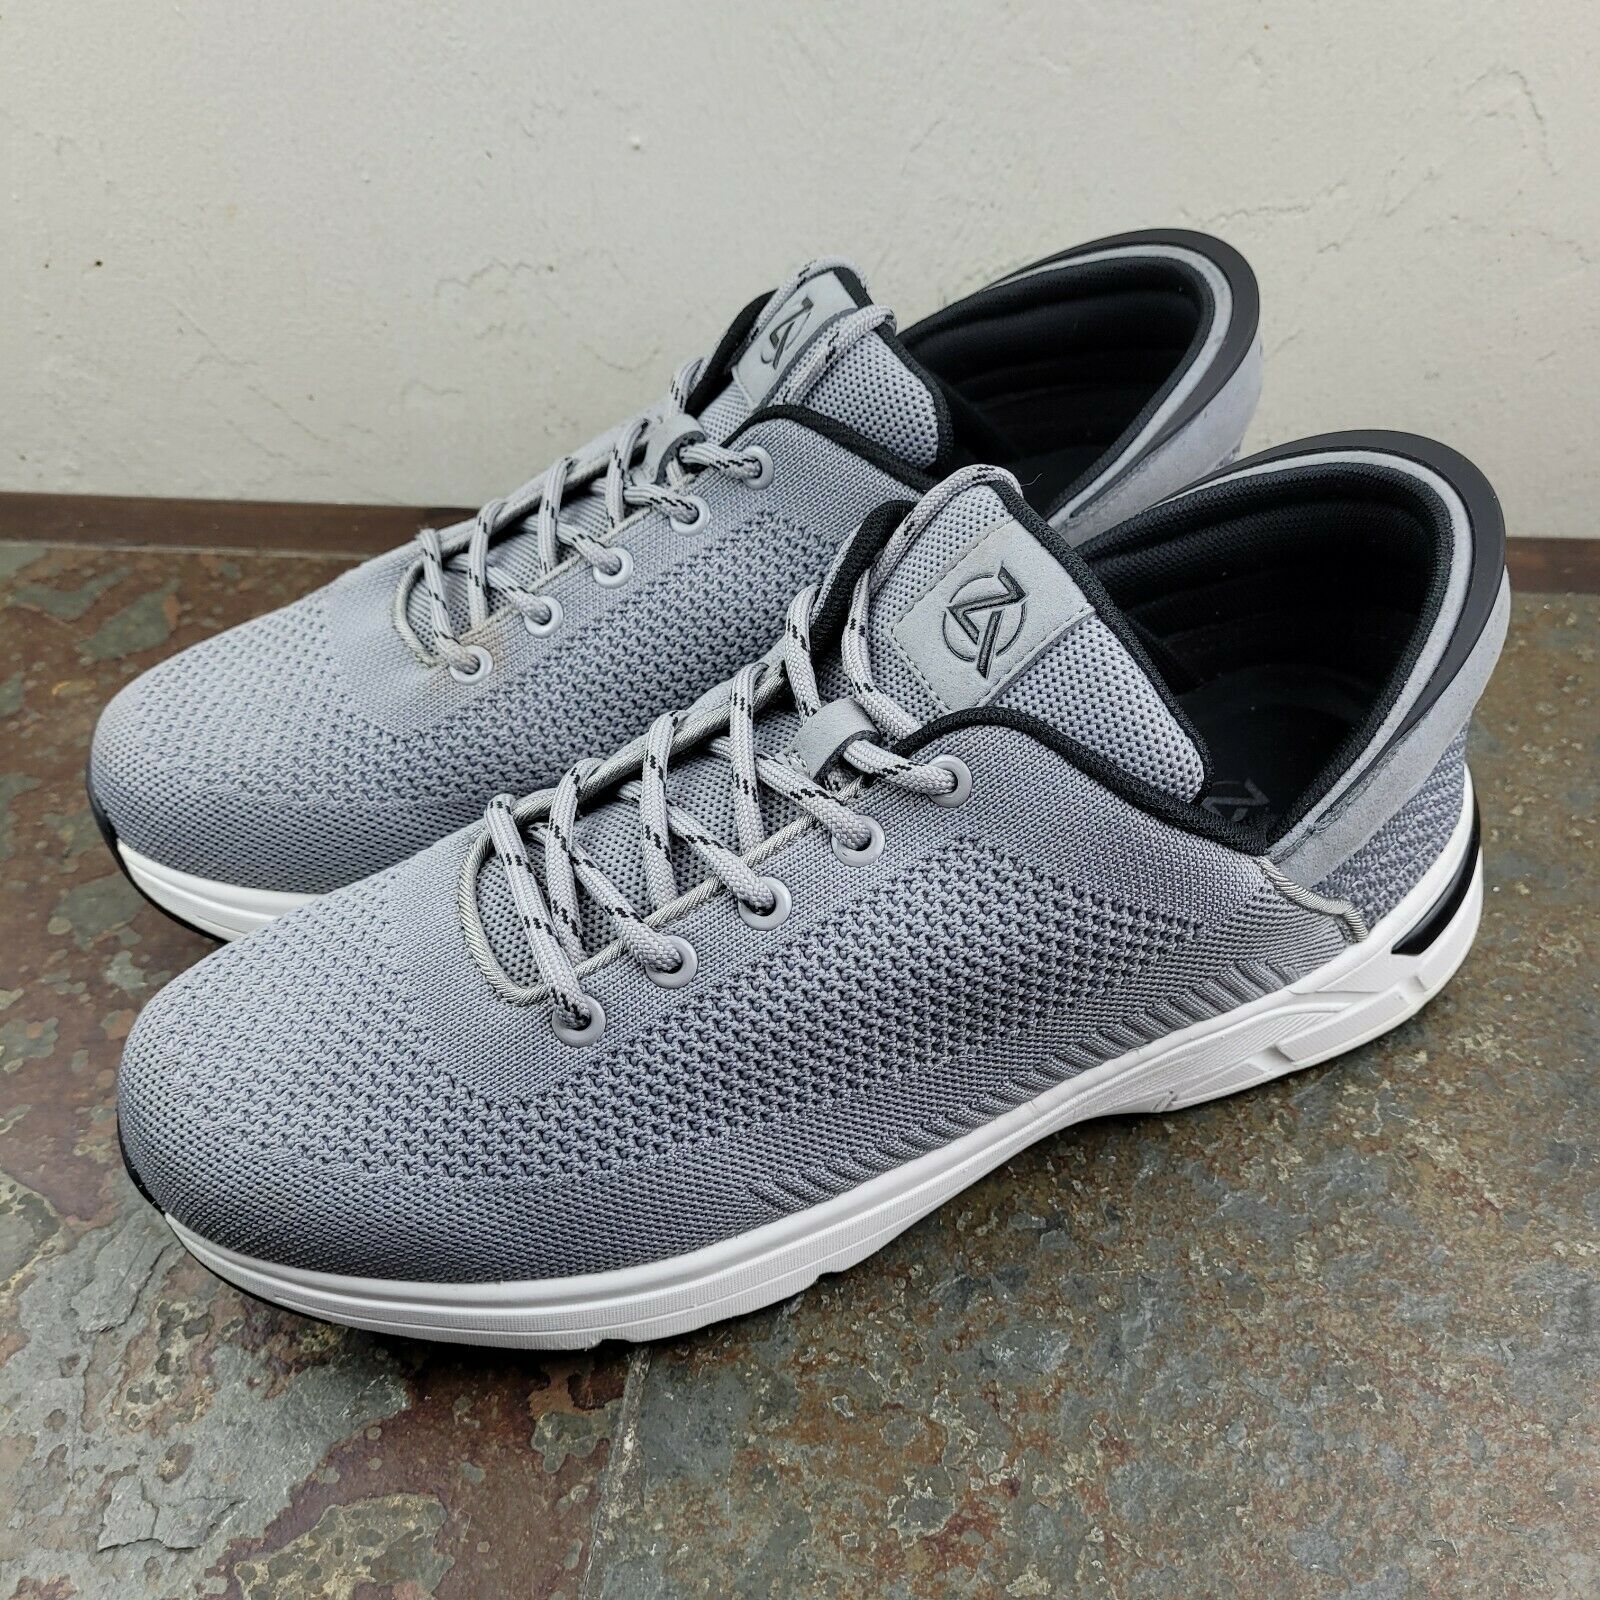 Zeba Hands Free Sneakers Tennis Shoes Athletic Comfort Walking Men's US 11.5